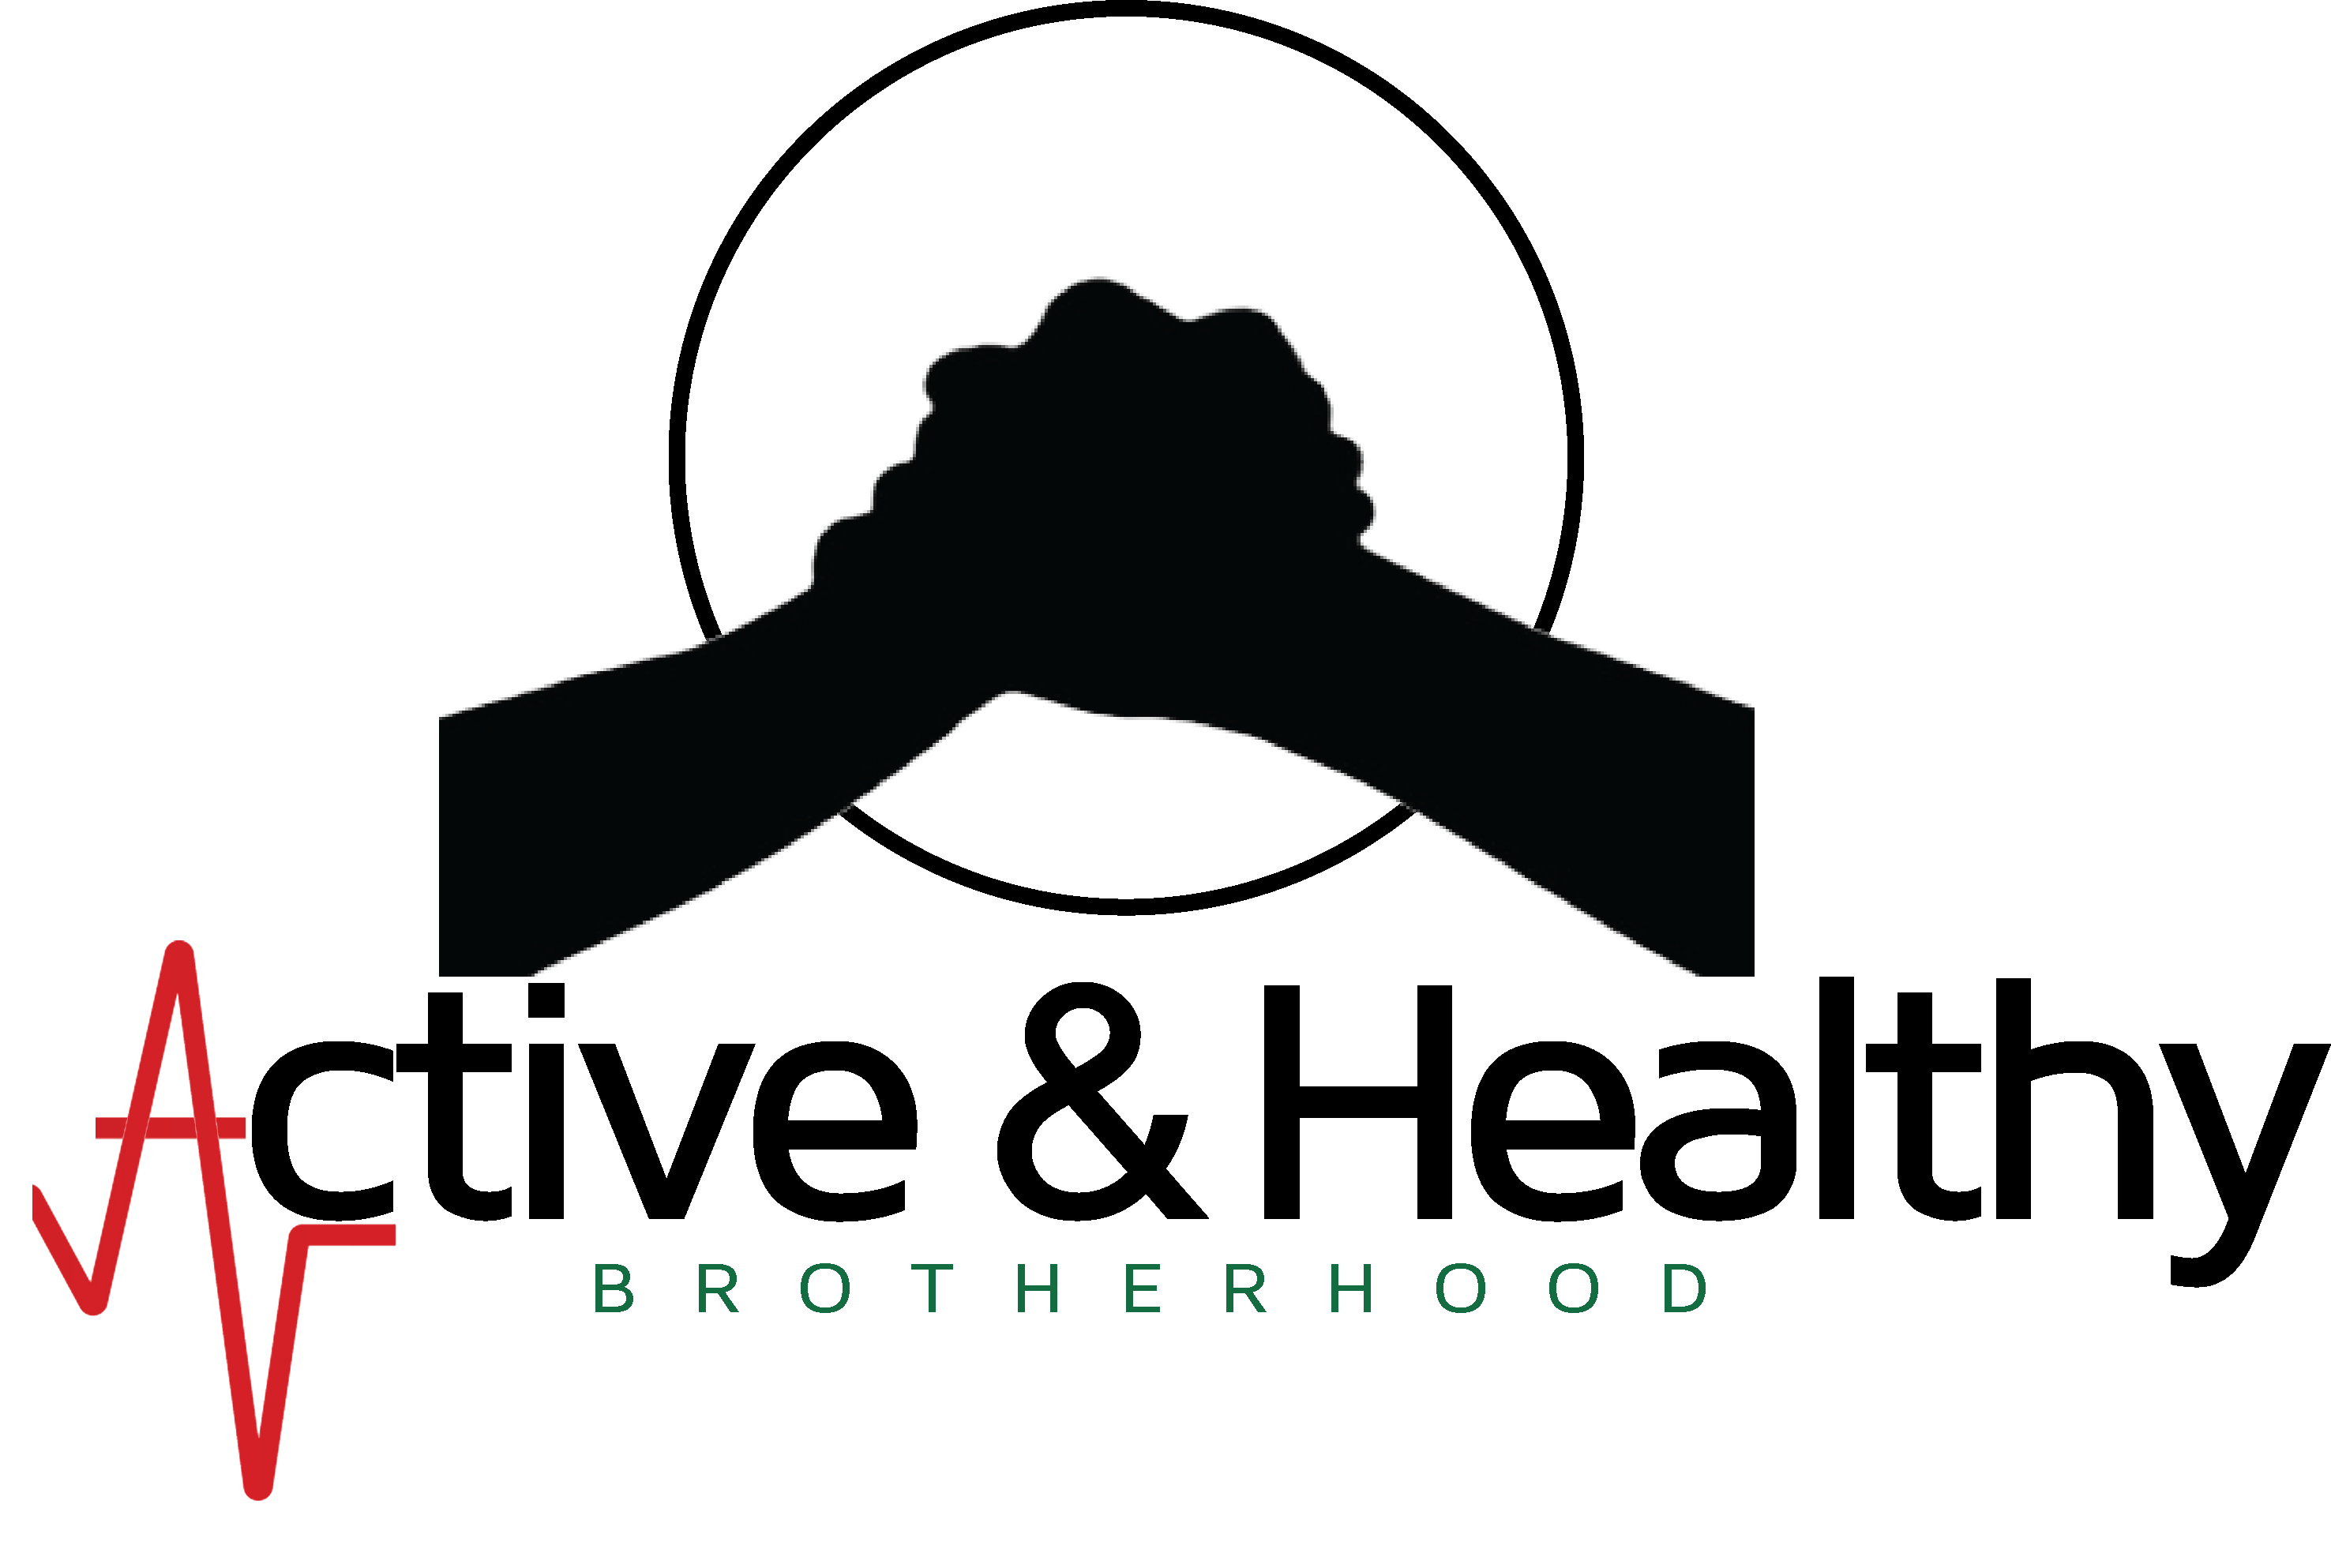 Brotherhood Logo - Active & Healthy Brotherhood | Gramercy Research Group